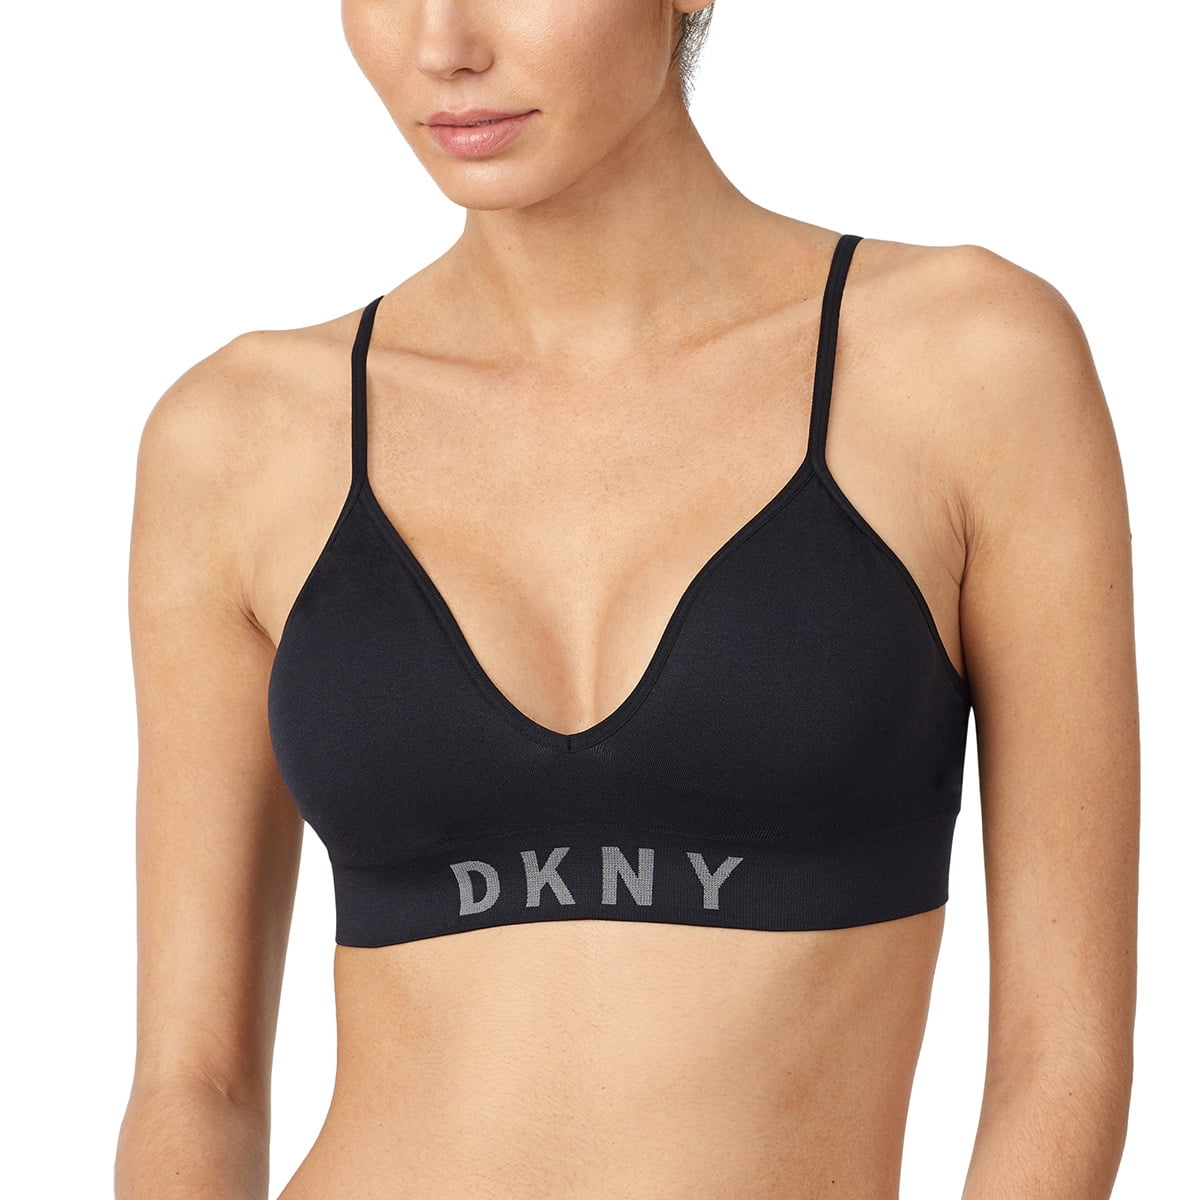 arroz fecha límite Cerebro DKNY Women's Seamless Bralette, 2 Pack, (Black/Nude, Large) - Walmart.com